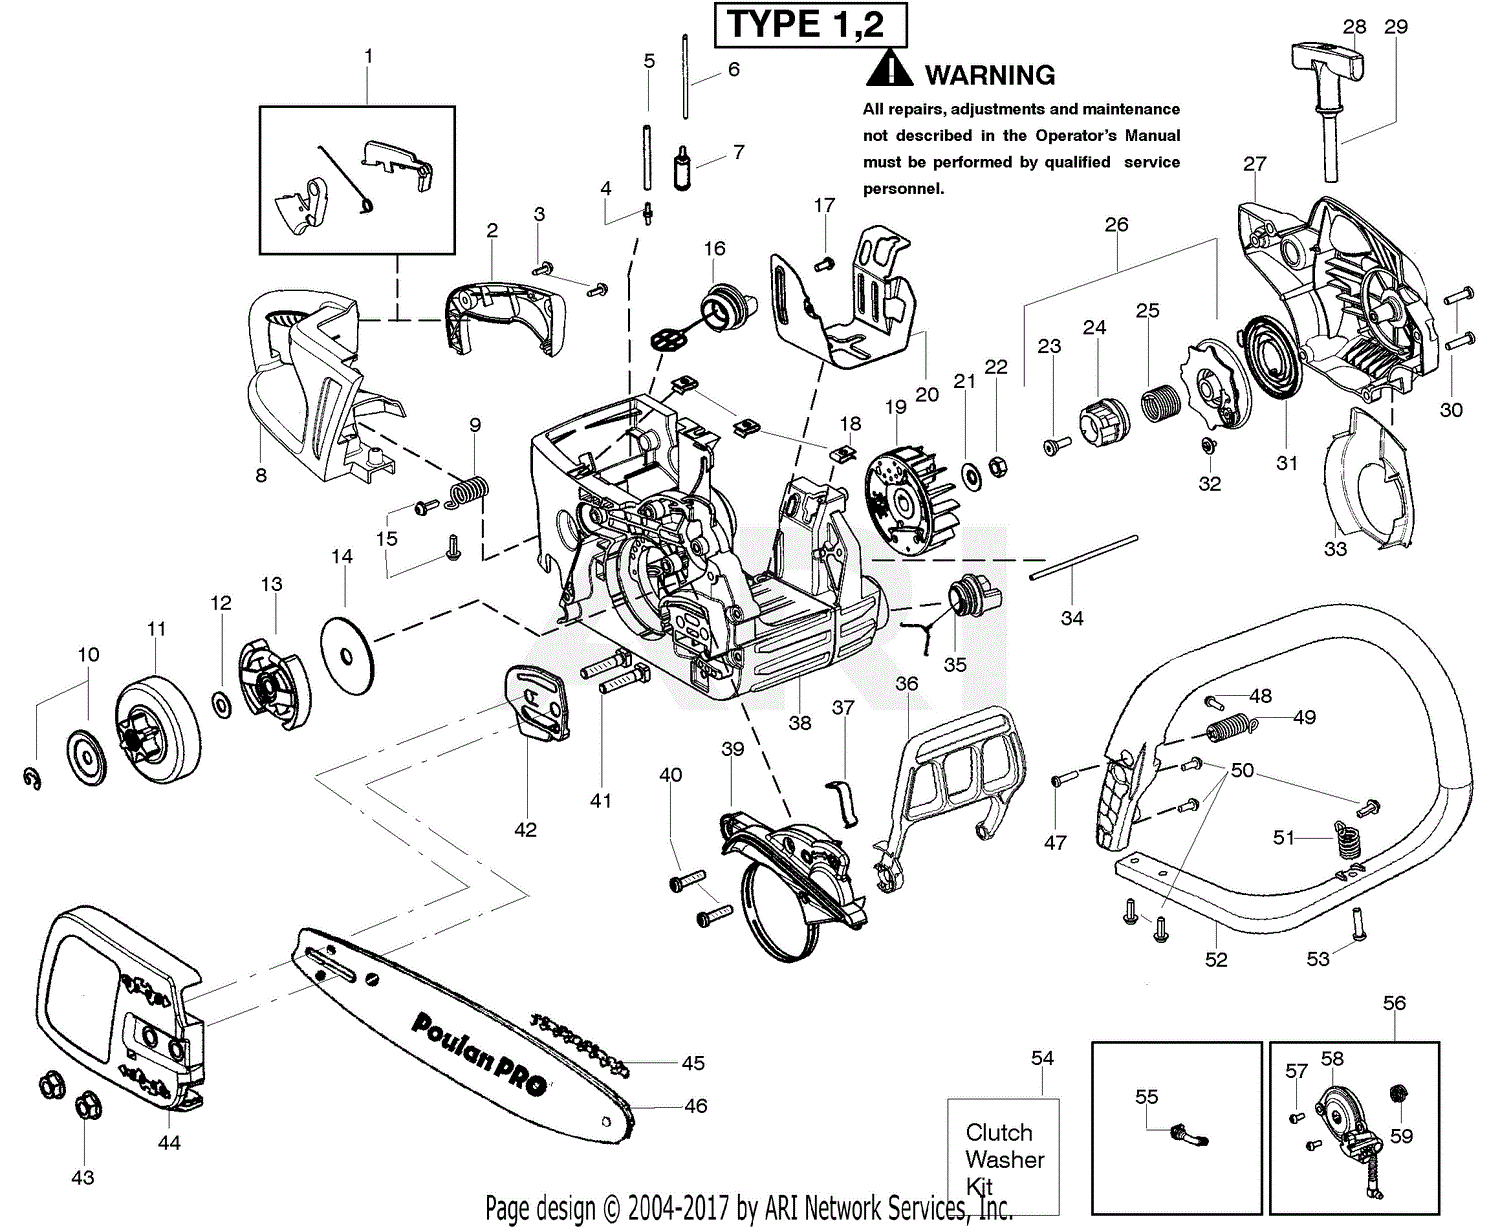 Poulan Sm4218av Poulan Pro Gas Saw Type 1 Parts Diagram